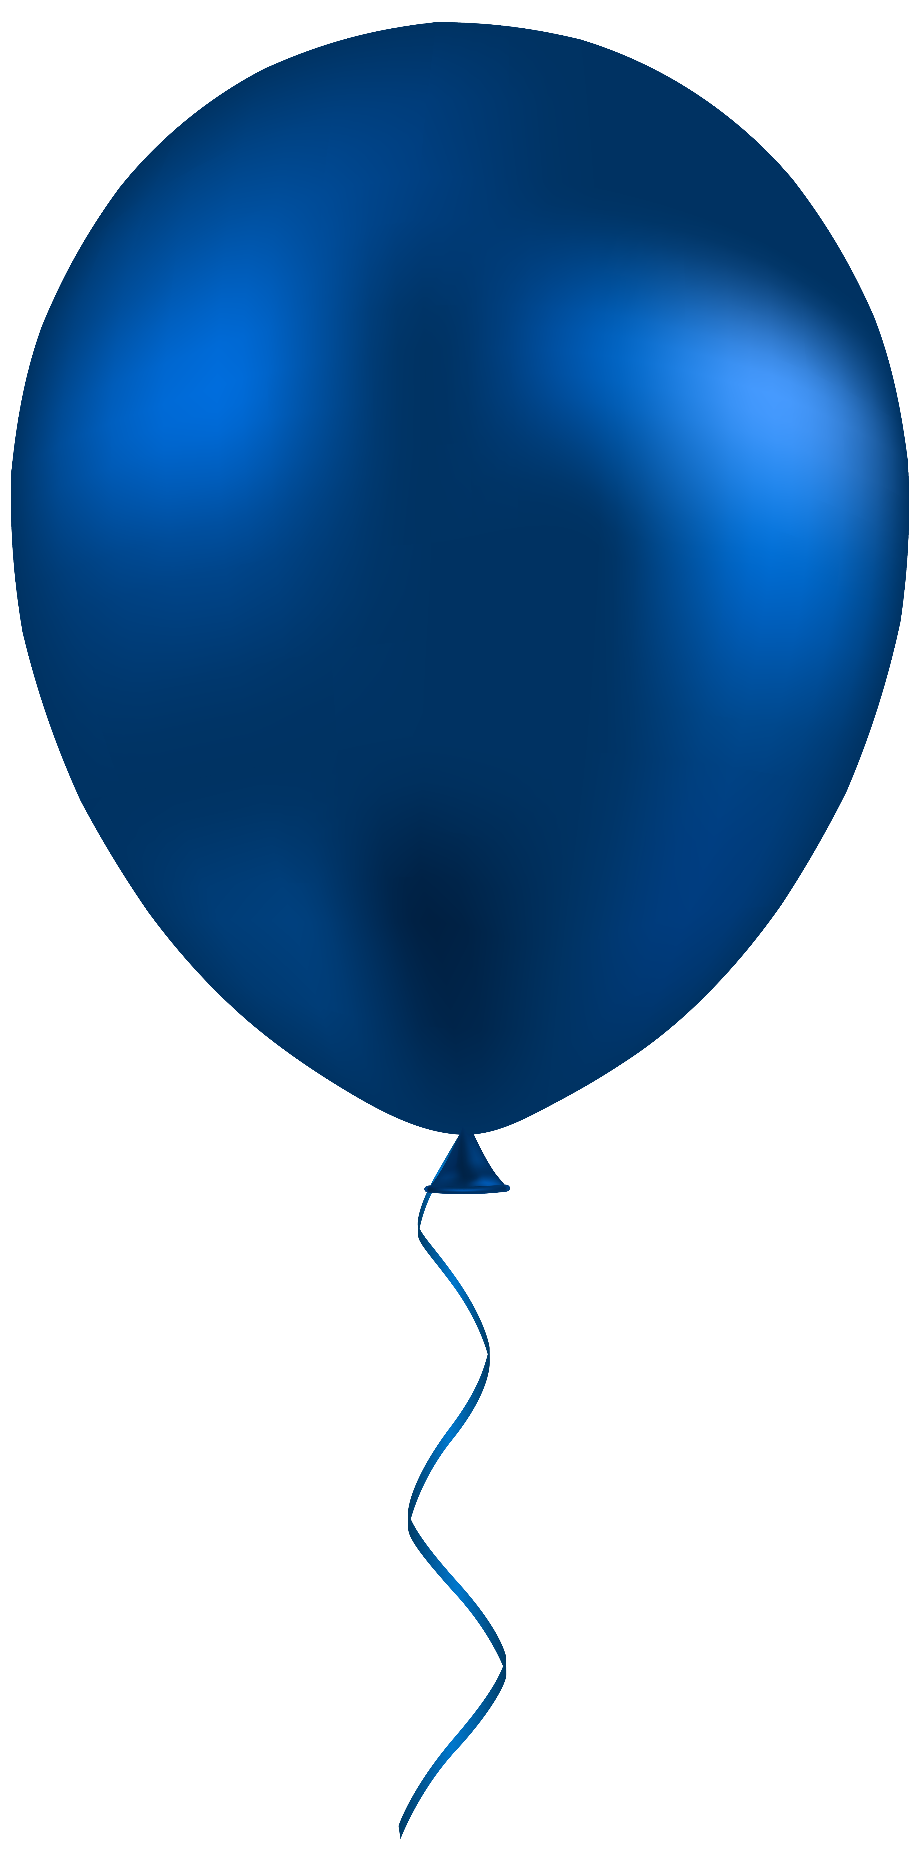 balloons clipart blue